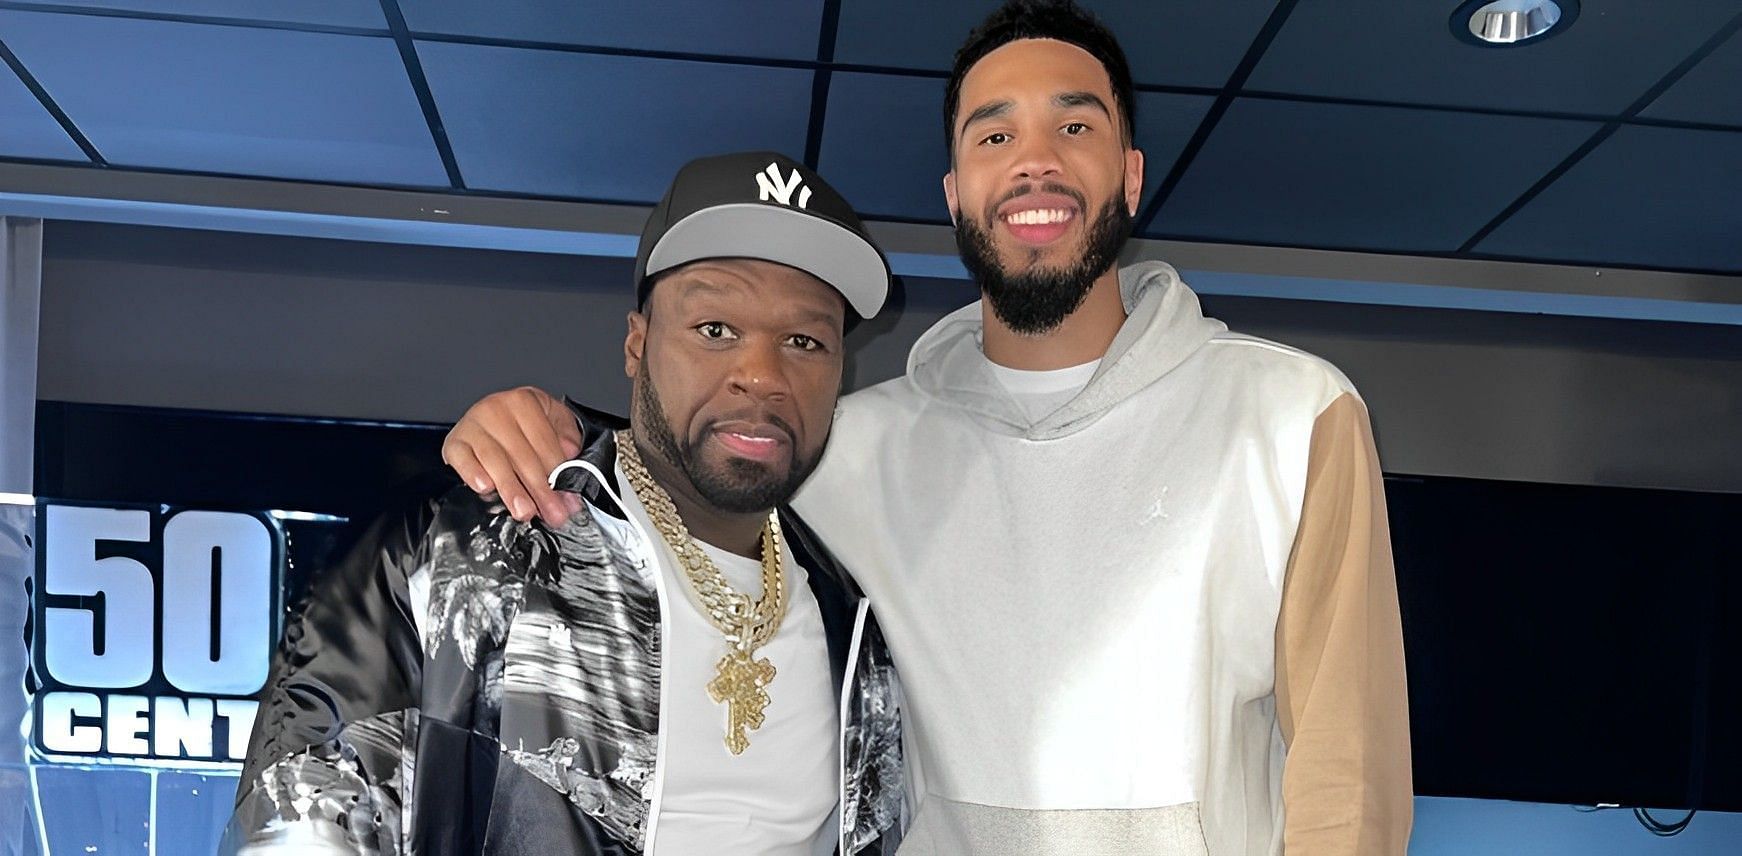 Jayson Tatum joins 50 Cent in his tour